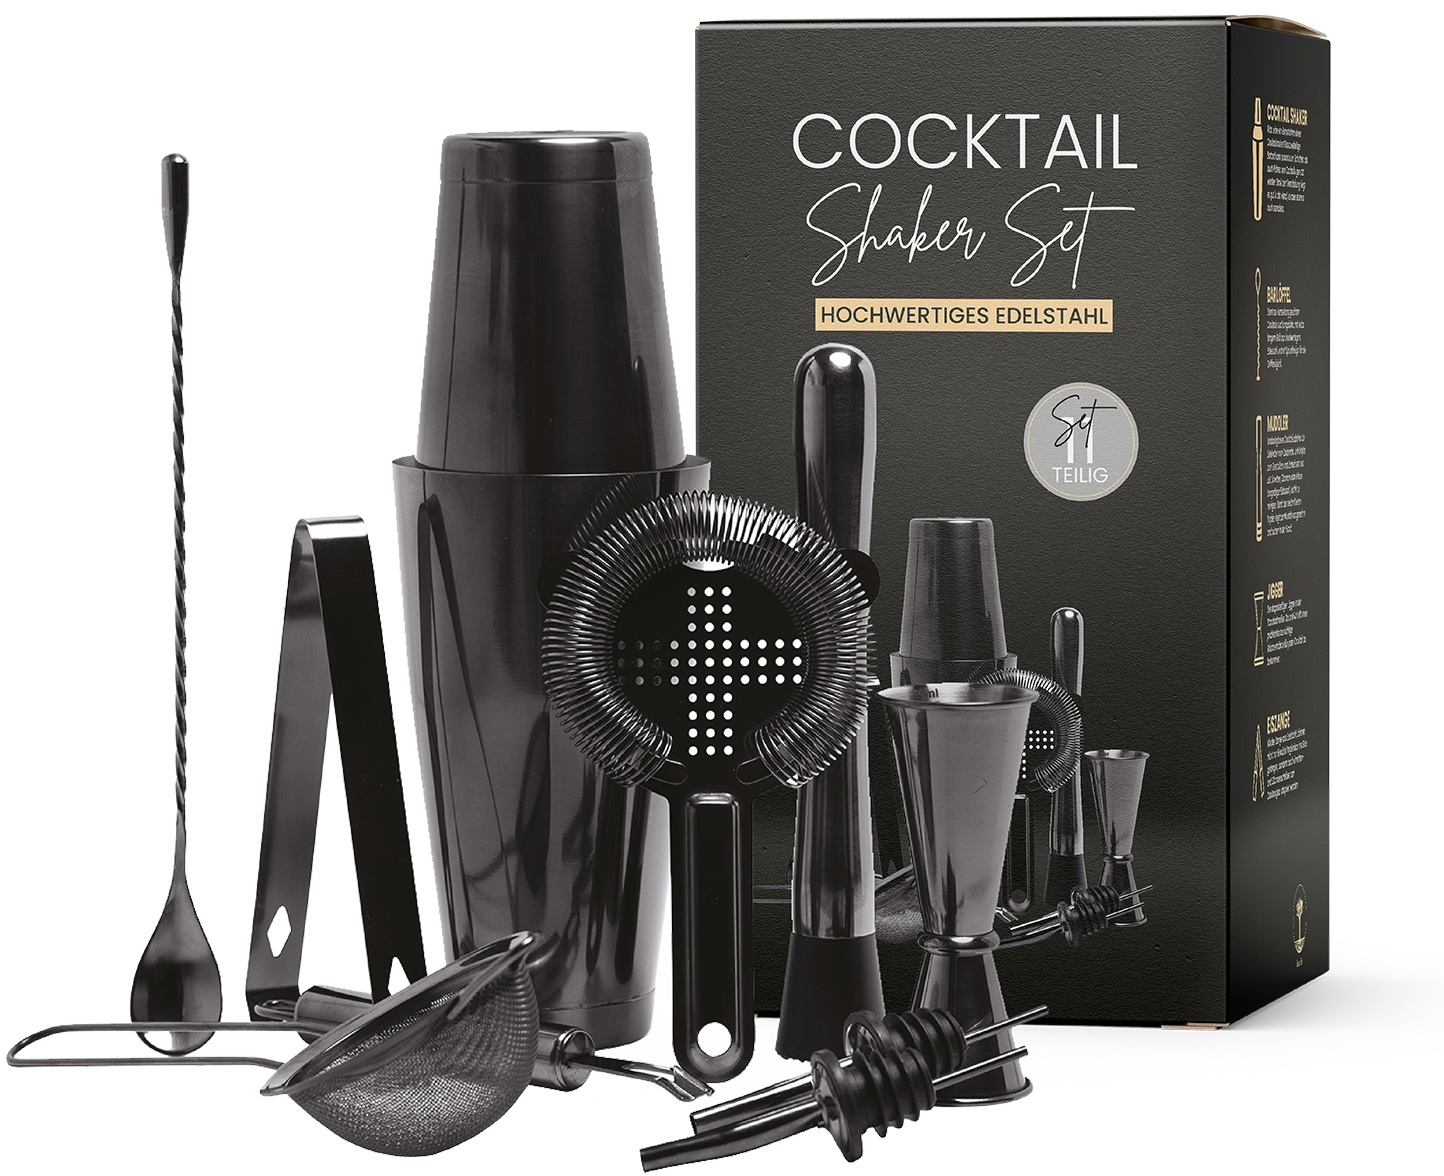 ShakeIN Cocktail Set 12-teilig  Edles Cocktail Shaker Set in Space Grey  Cocktail Mix Set